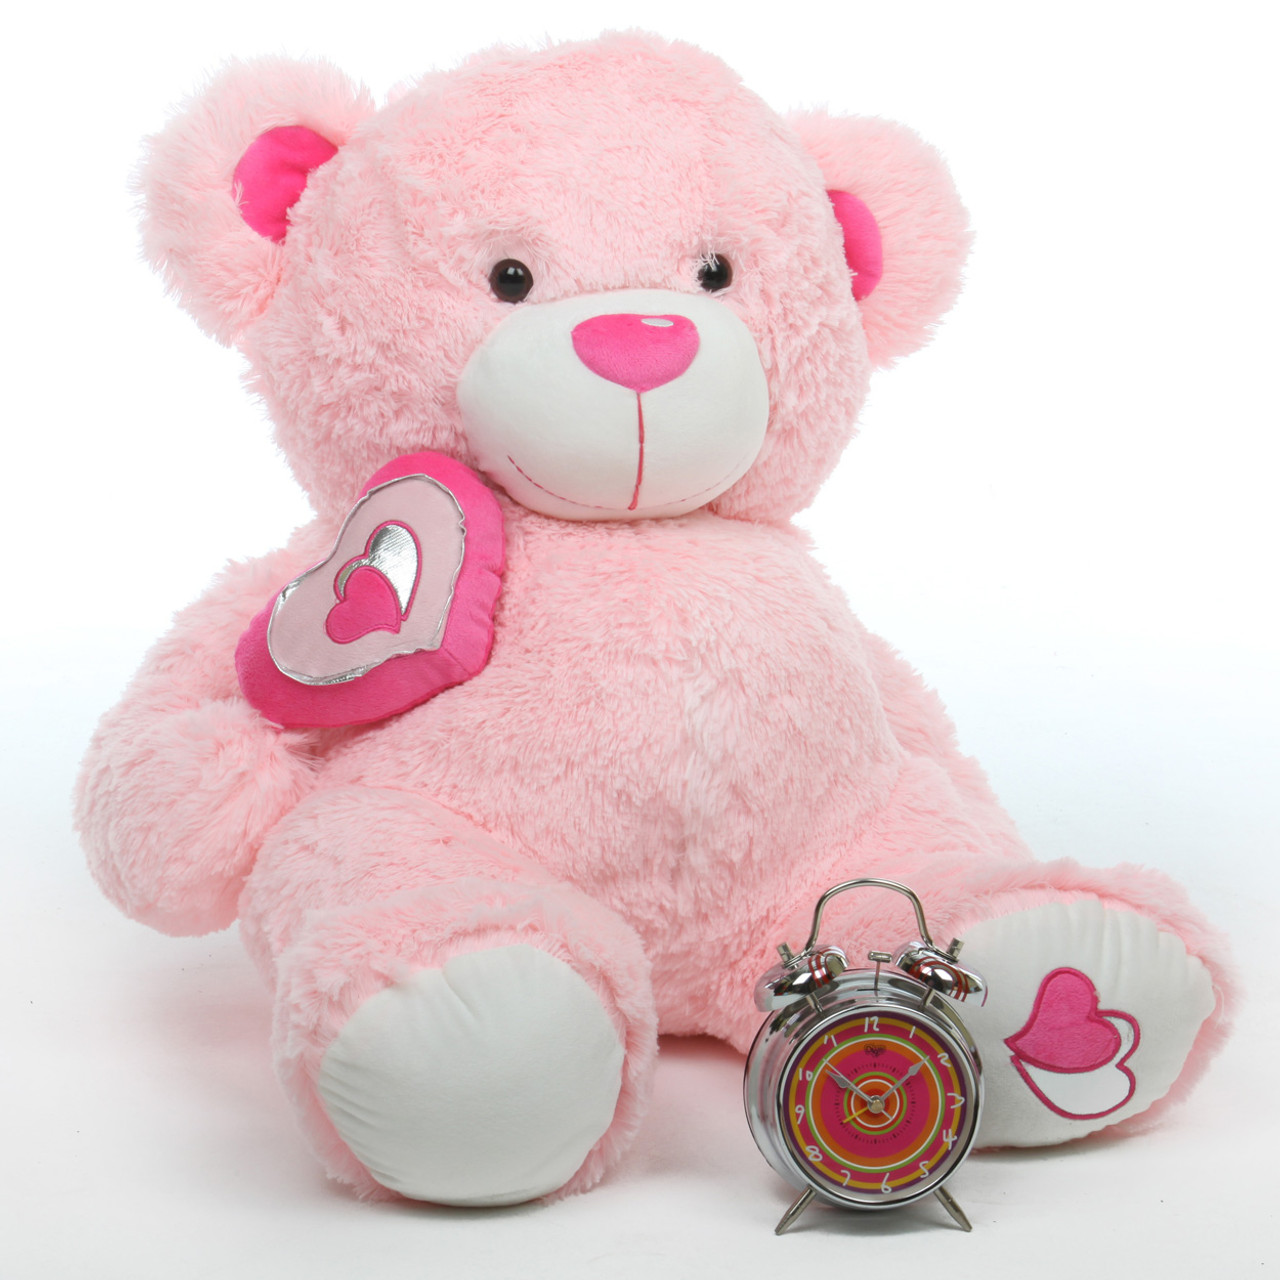 Cutie Pie Big Love pink teddy bear 30in